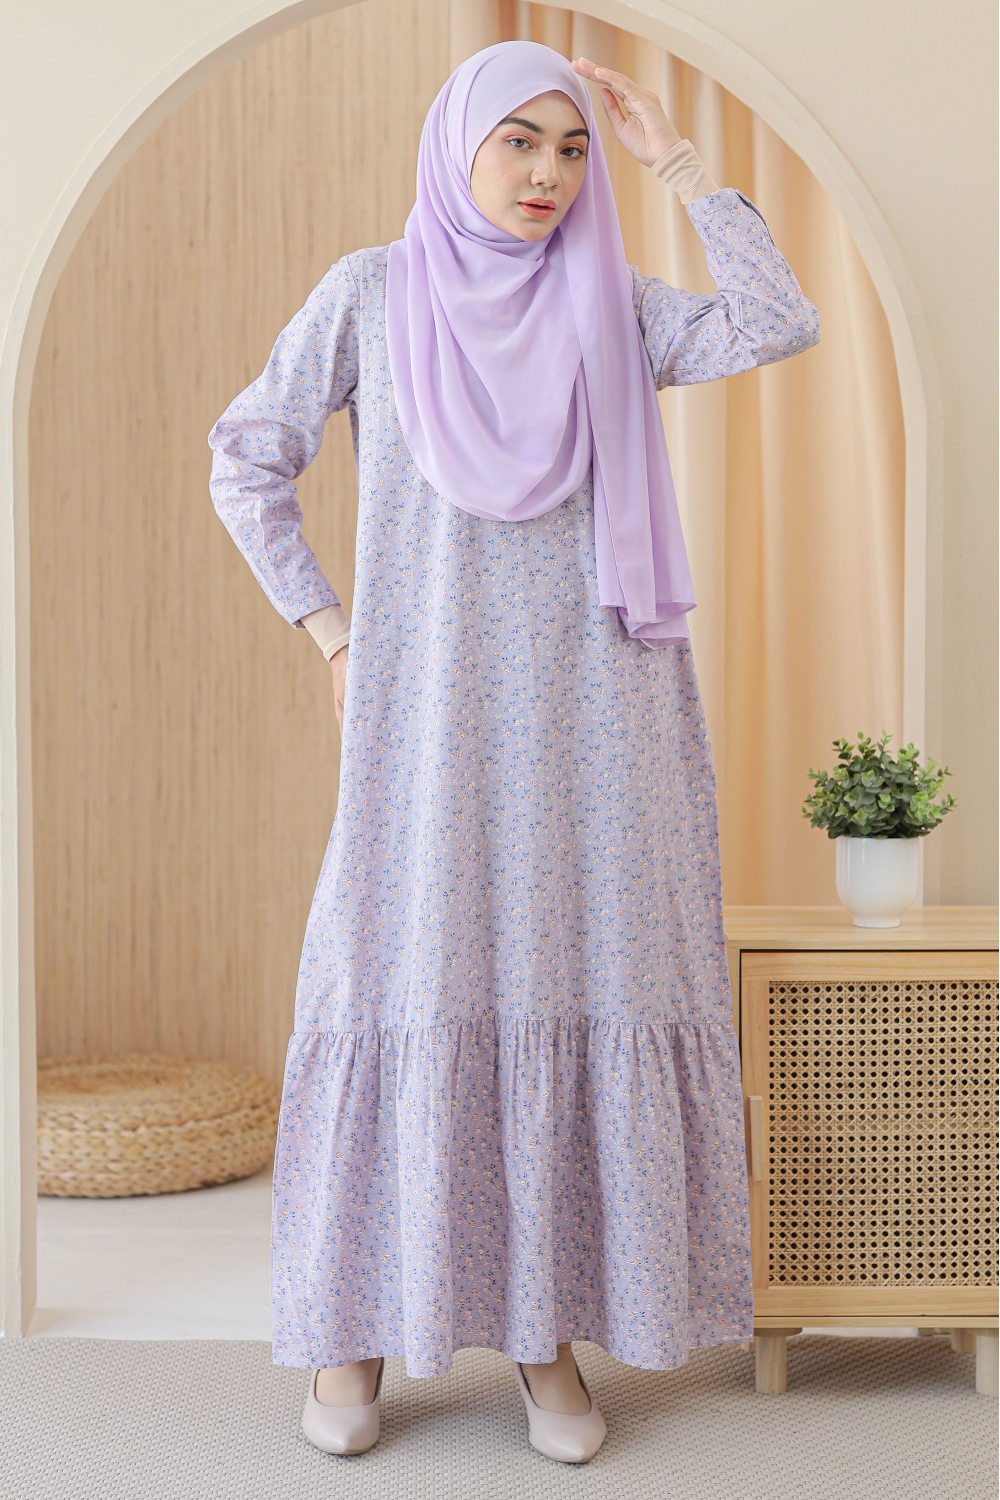 SAMARA - ALARA Dress in Lavender